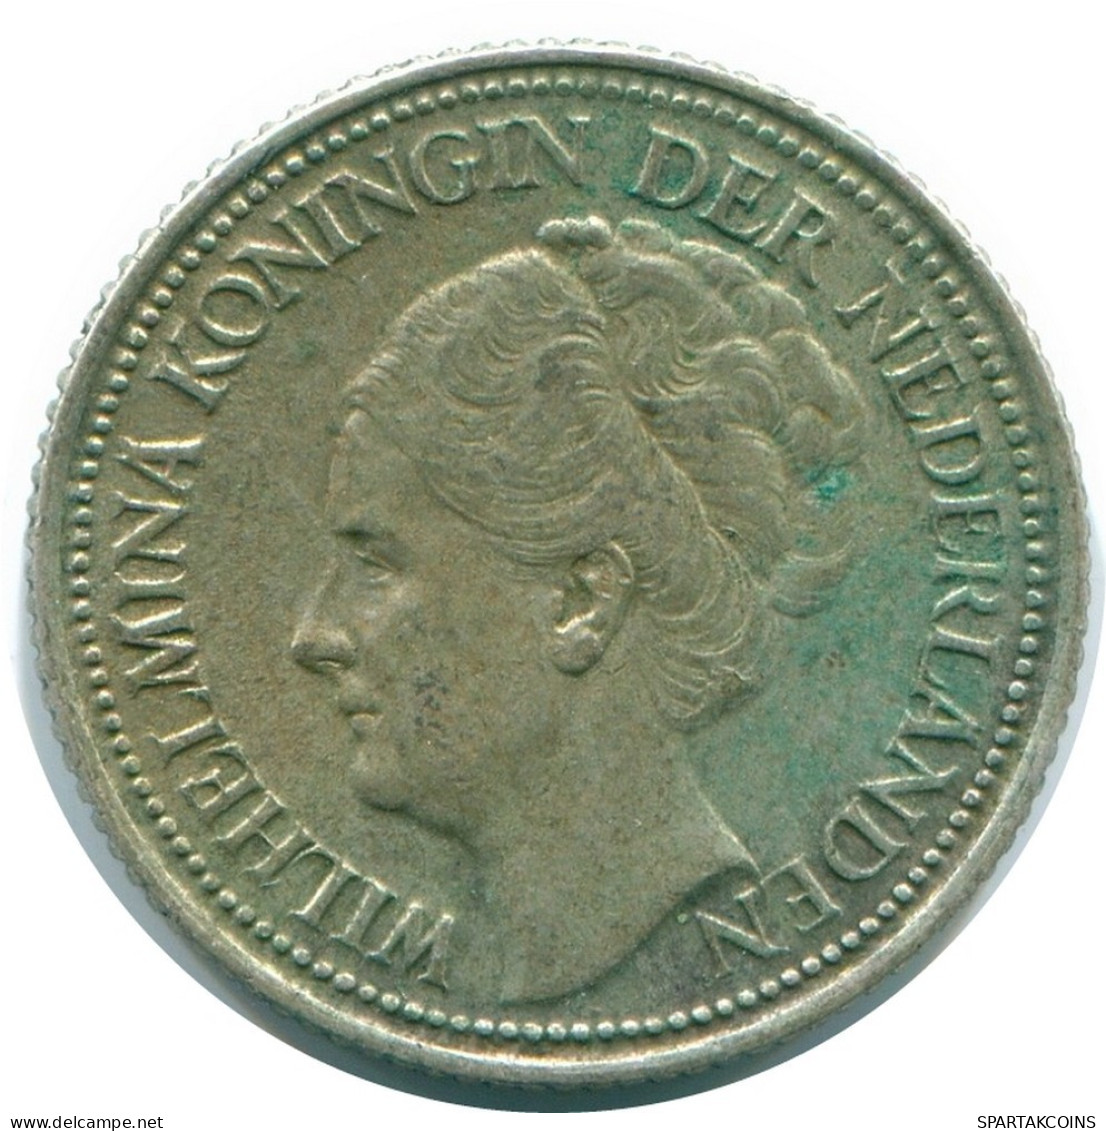 1/4 GULDEN 1947 CURACAO Netherlands SILVER Colonial Coin #NL10829.4.U.A - Curacao